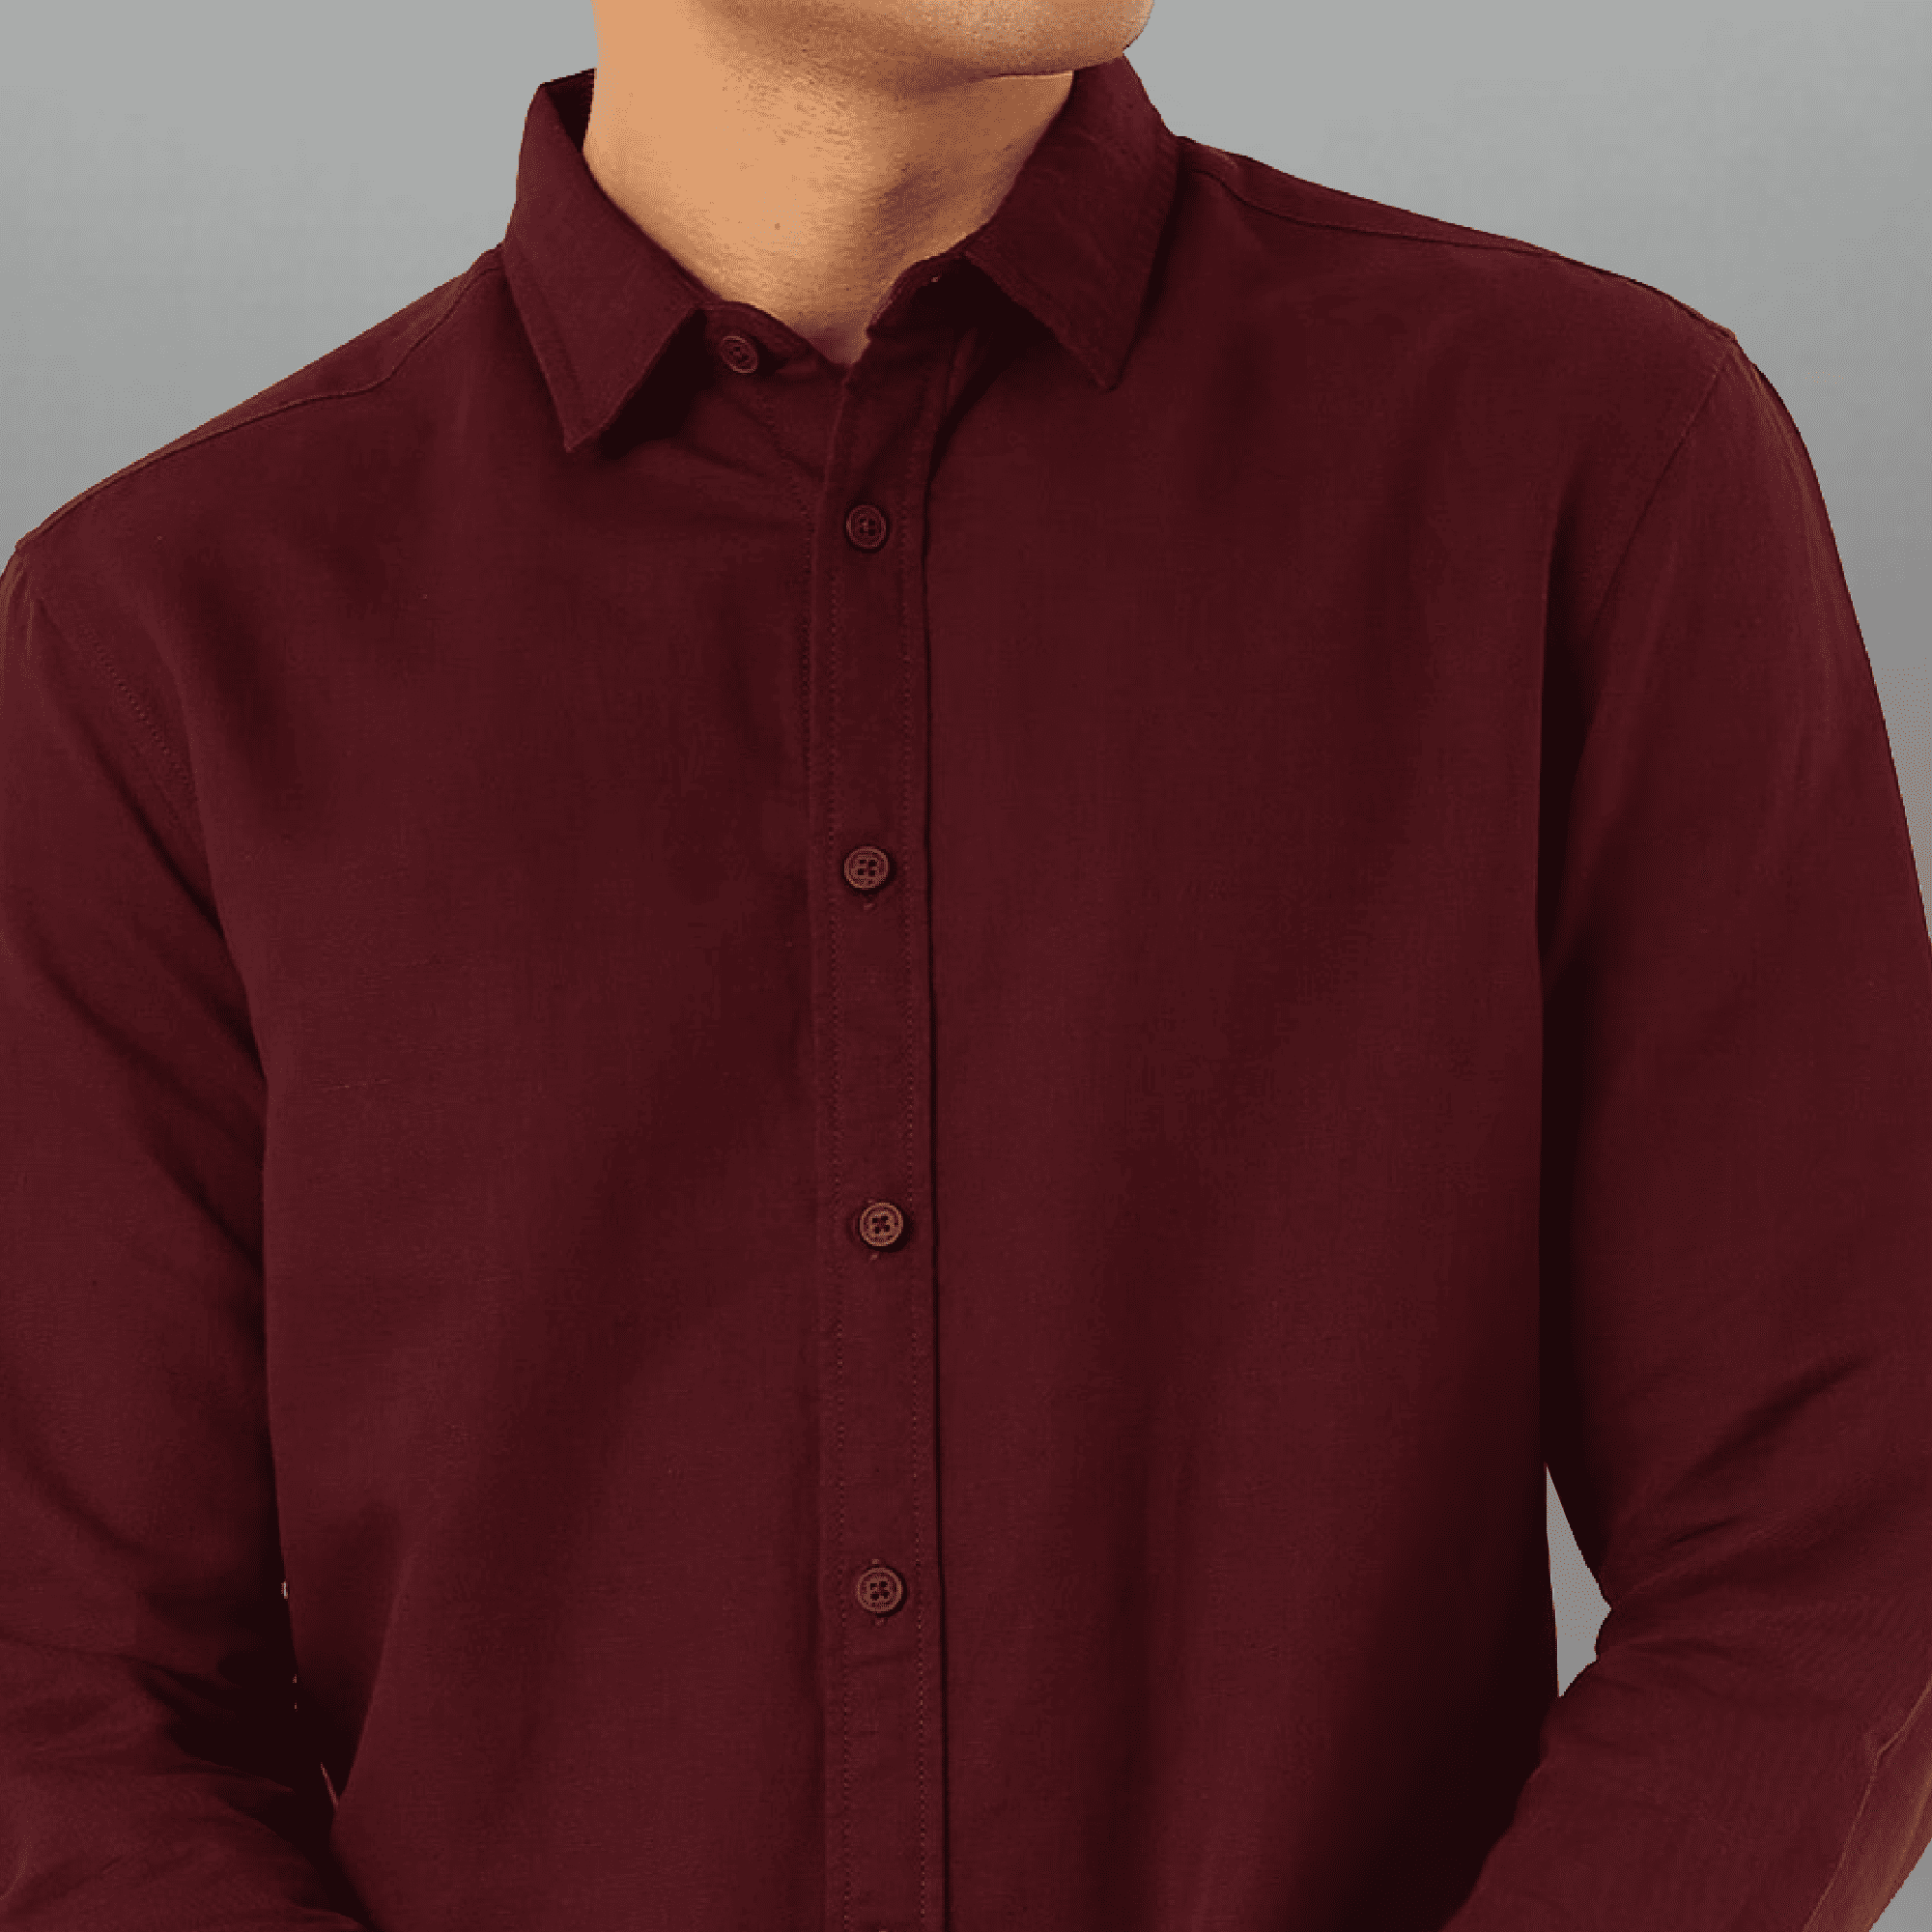 Men's Full Sleeve Maroon Solid Shirt-RMS051